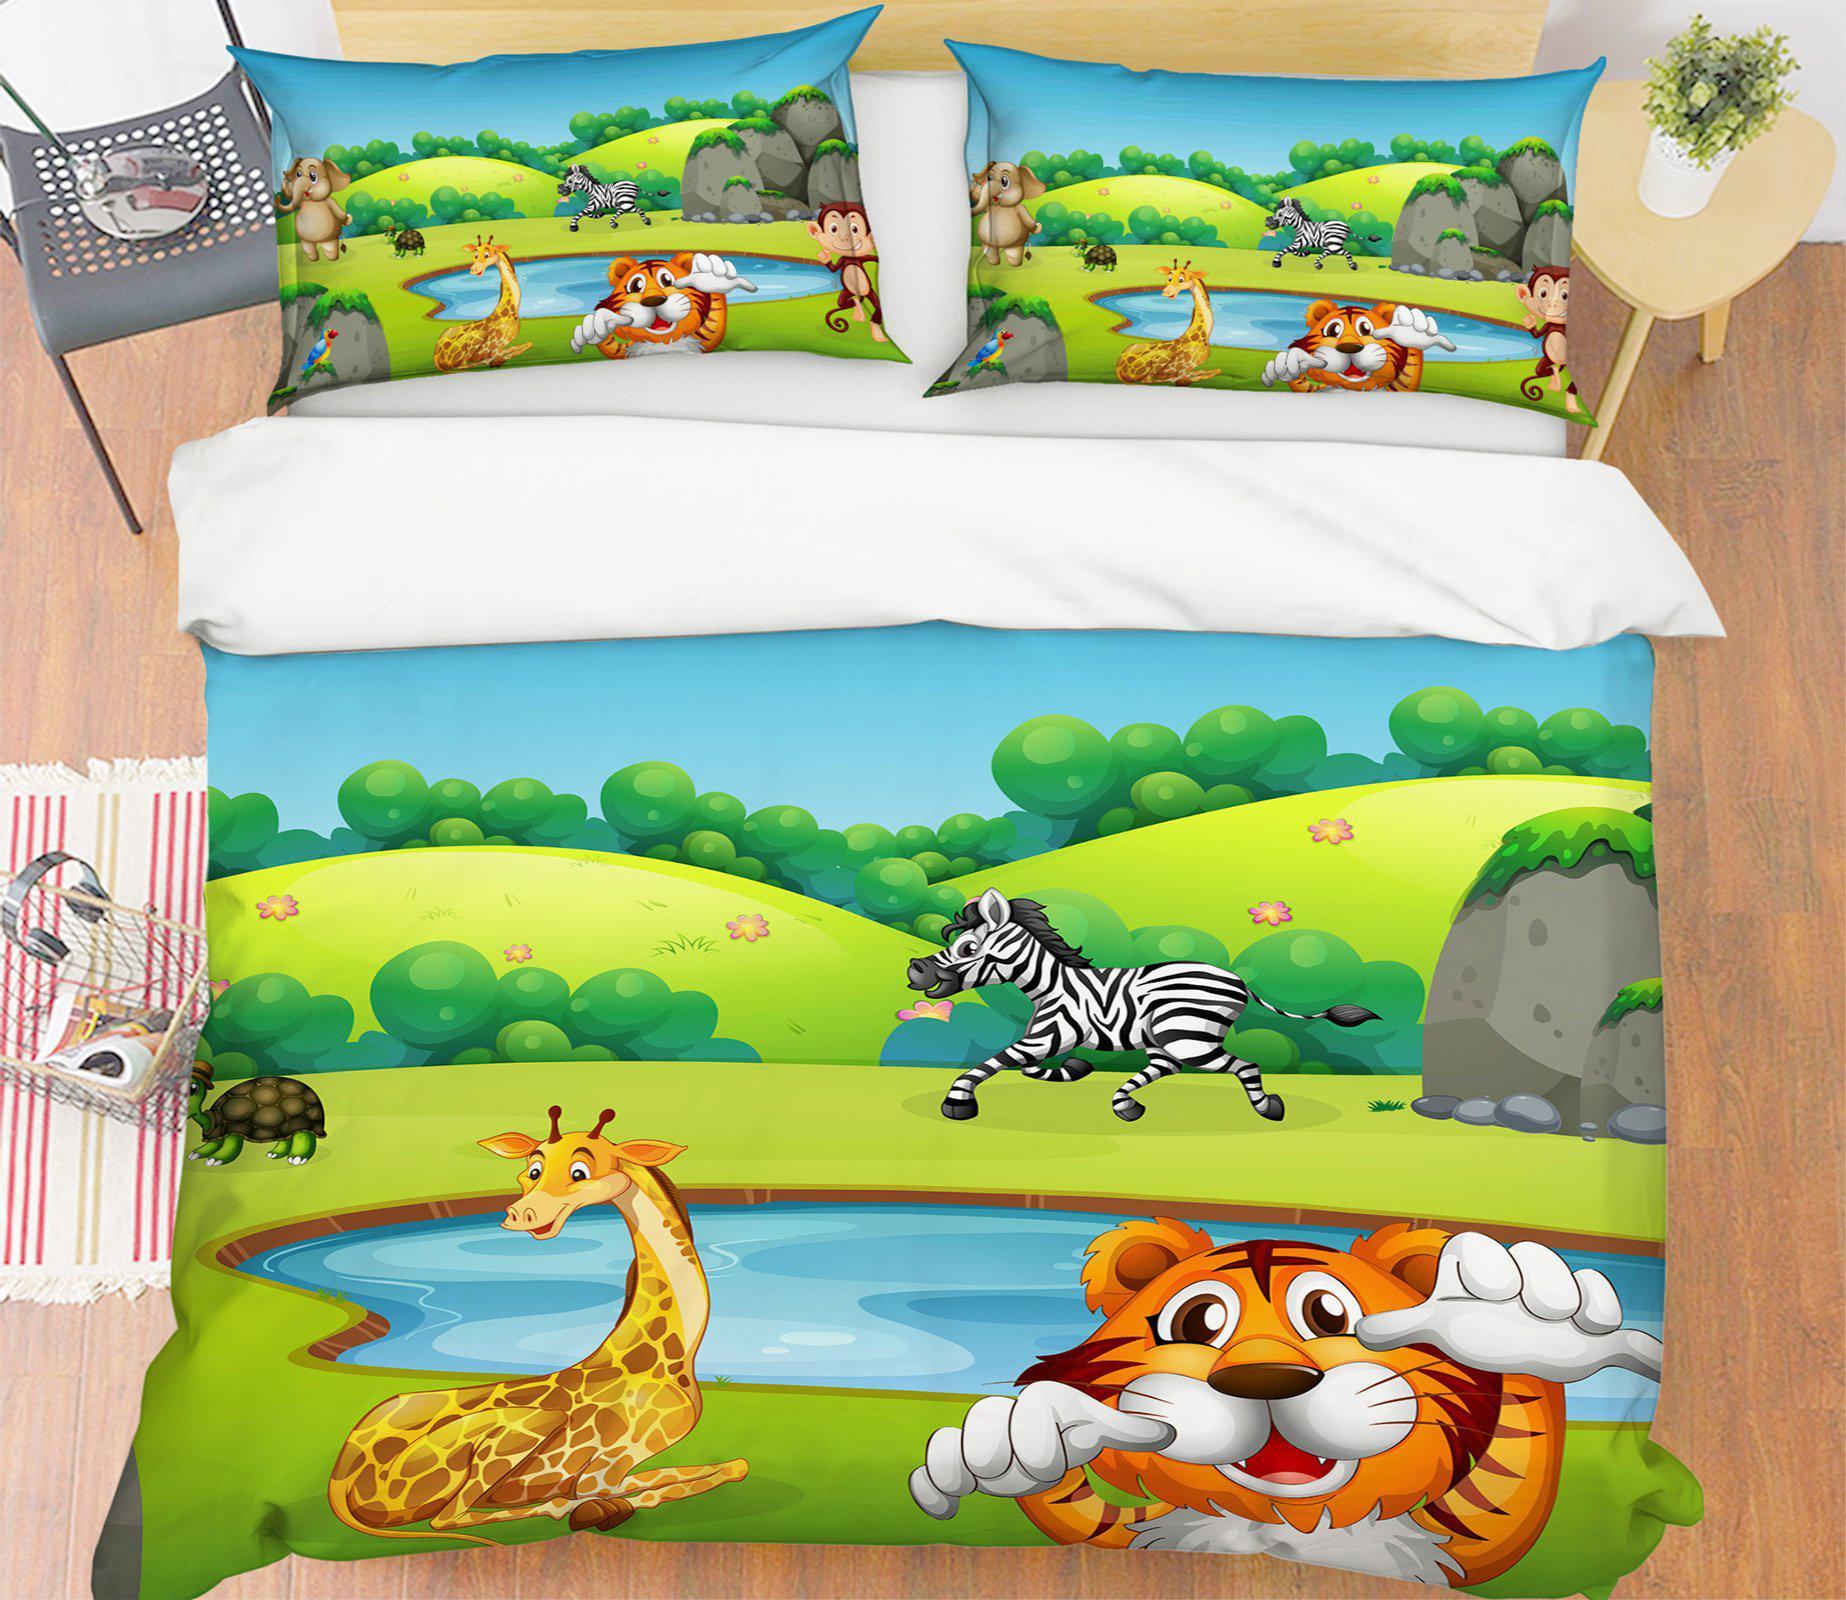 3D Bed Pillowcases Quilt Zebra Lion Giraffe 19160 Quilt Cover Set Bedding Set Pillowcases 3D Bed Pillowcases Quilt Duvet cover